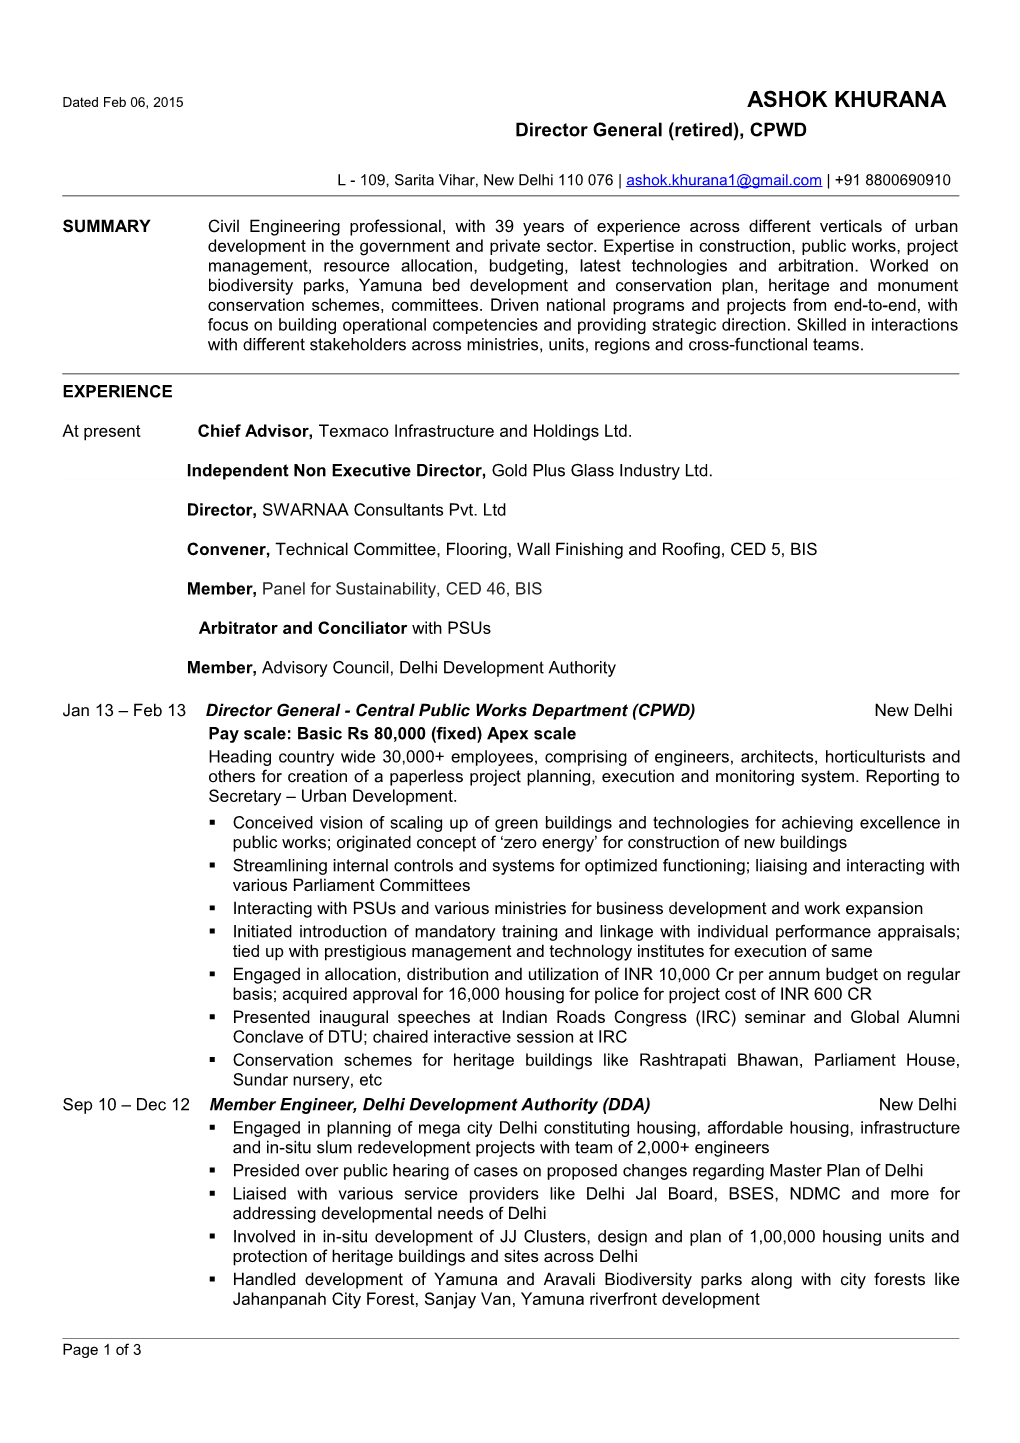 Page 2 of 3 Resume of Ashok Khurana